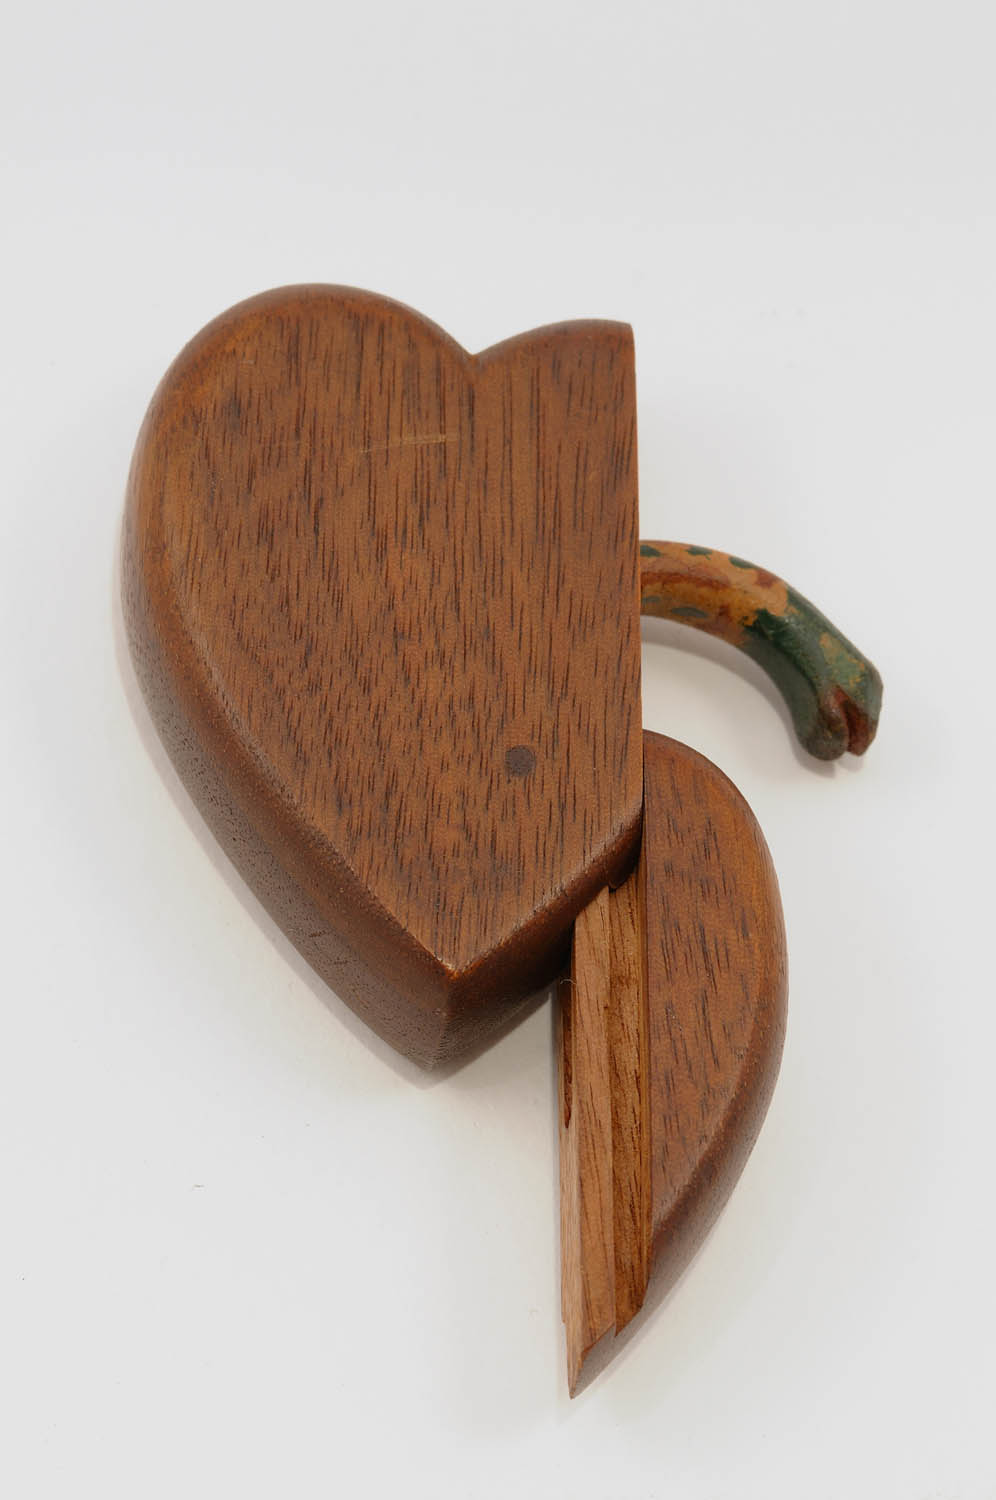 Wood Heart Shaped Wooden Box Plans PDF Plans